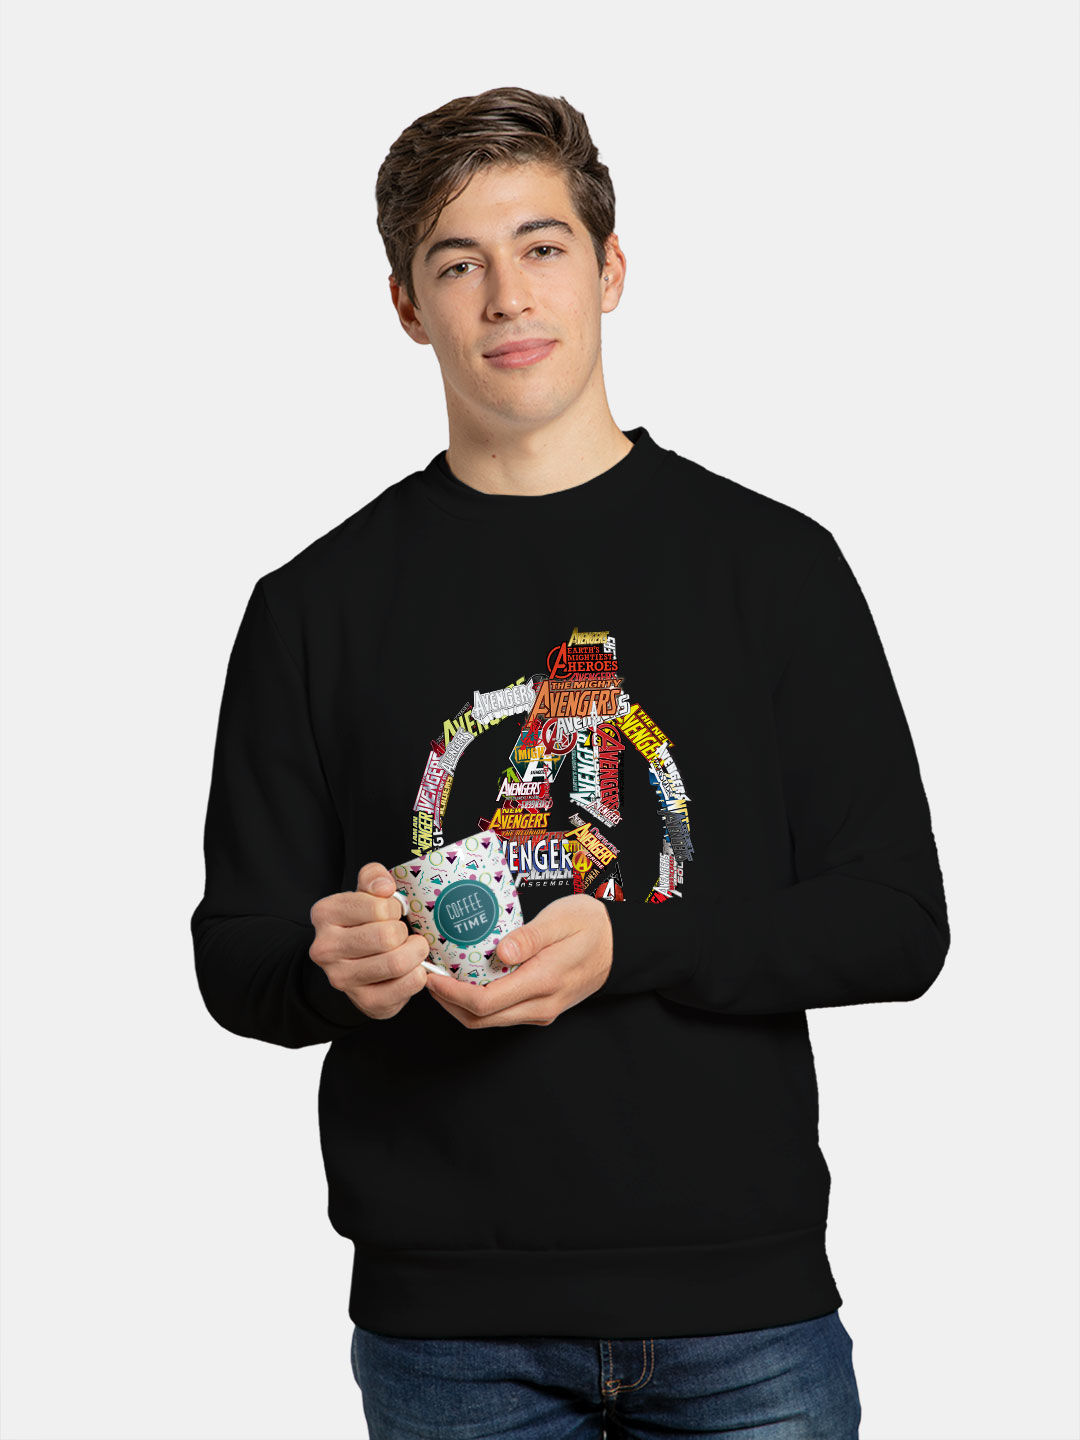 Buy Avengers Title - Male Designer Sweatshirt Sweatshirts Online